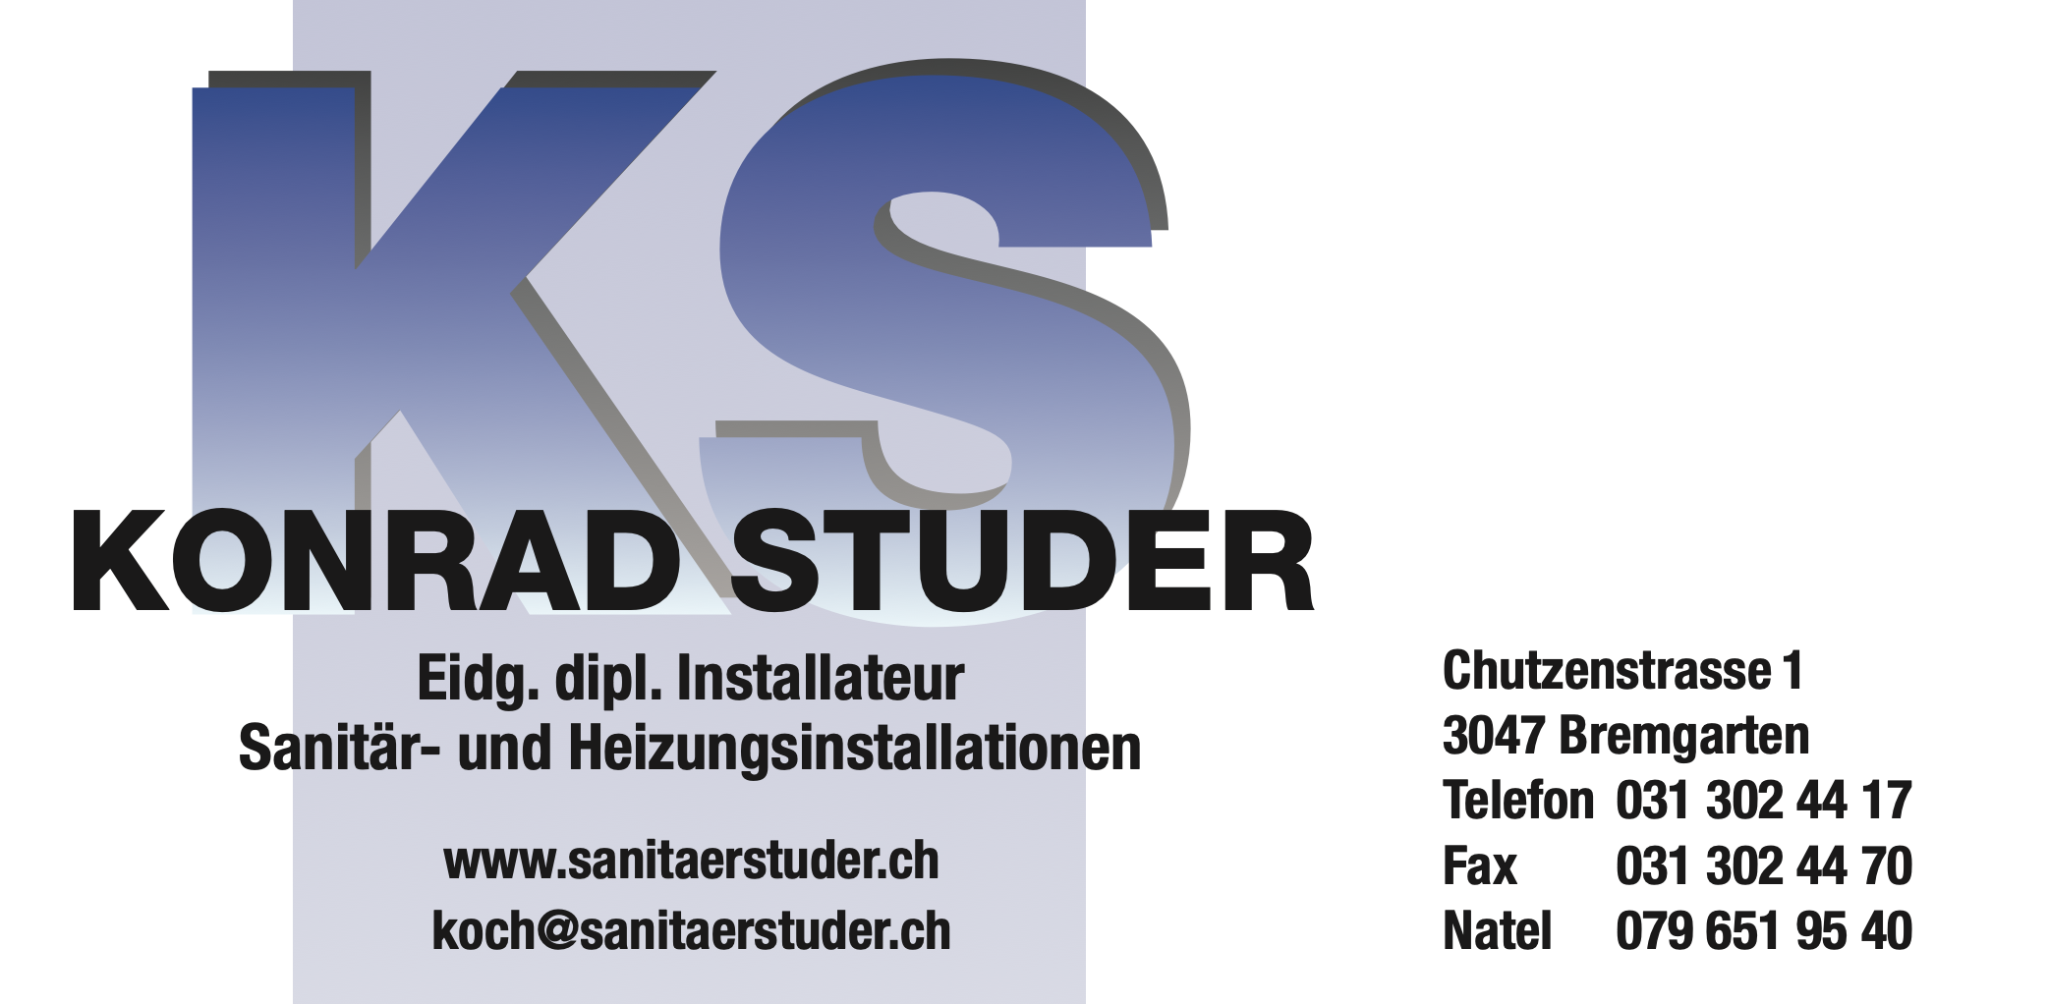 Konrad Studer GmbH